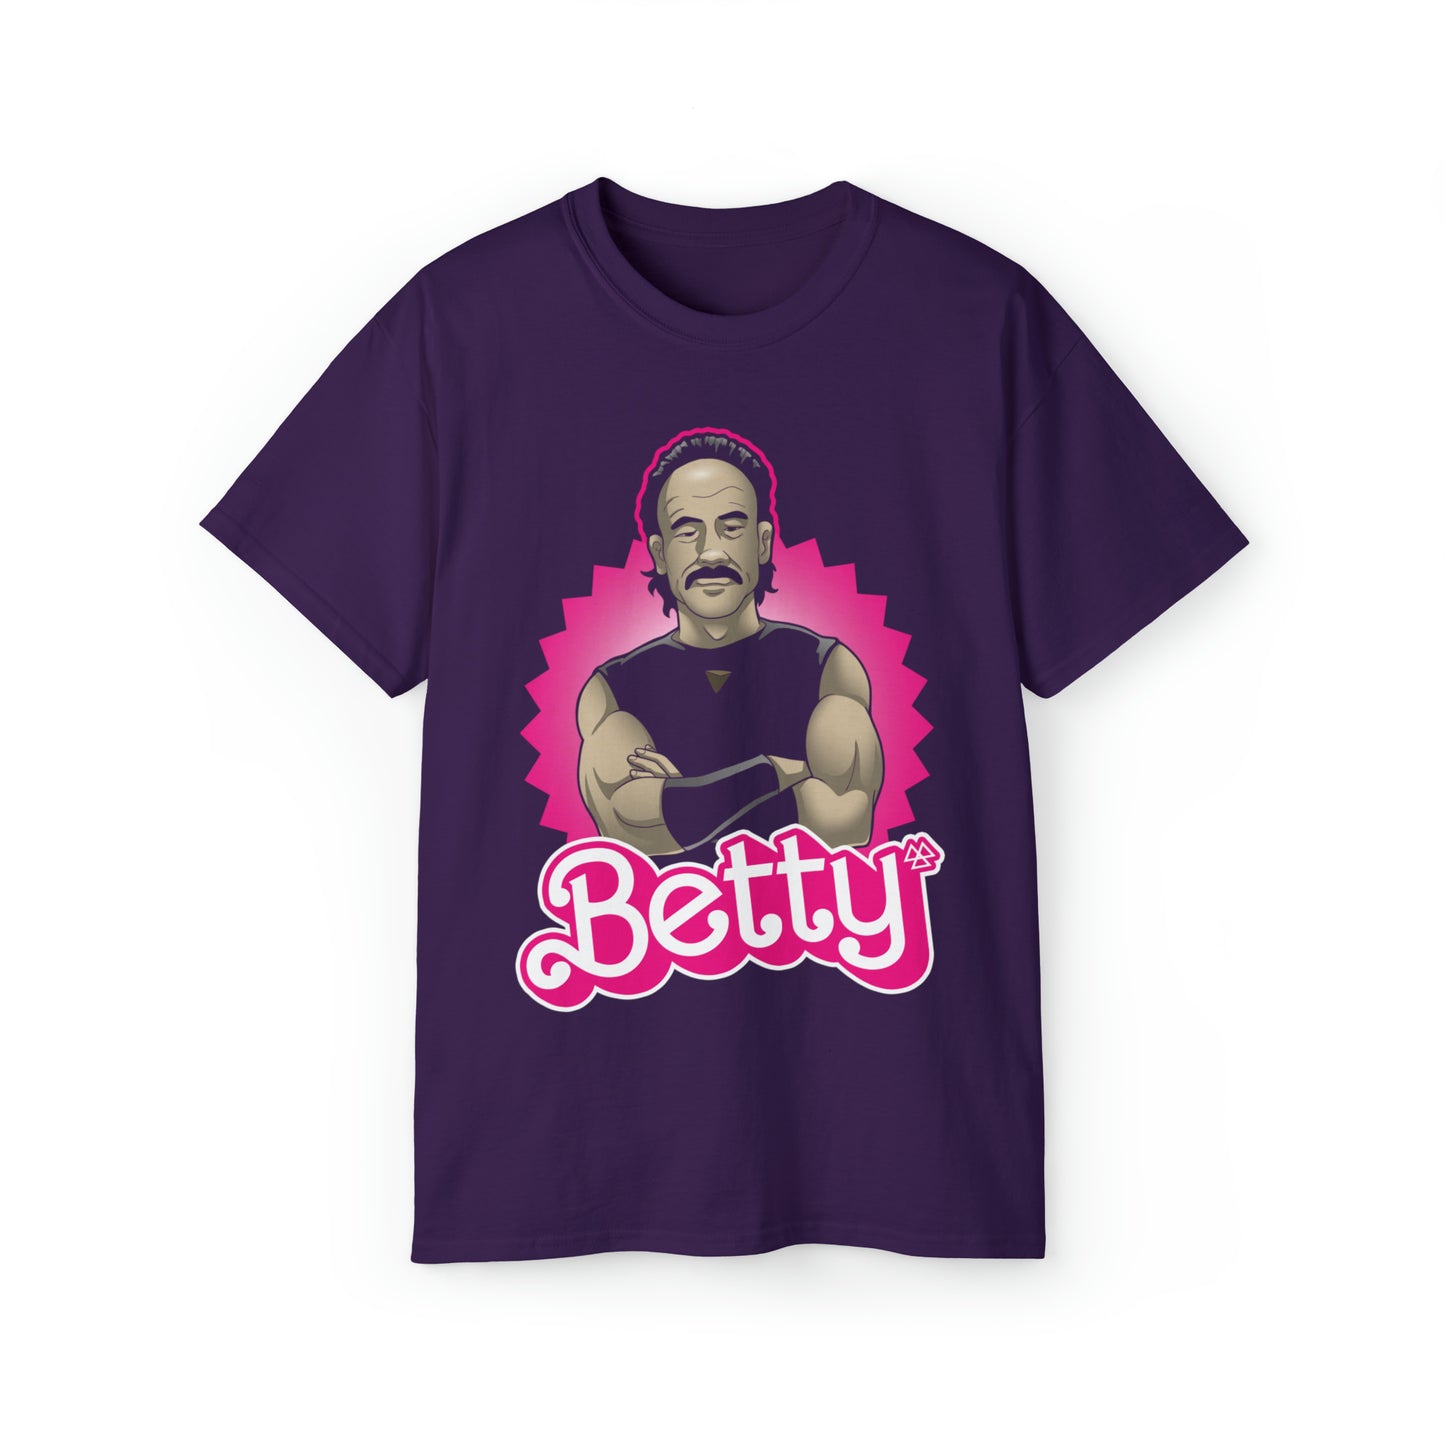 Betty Doll t-shirt